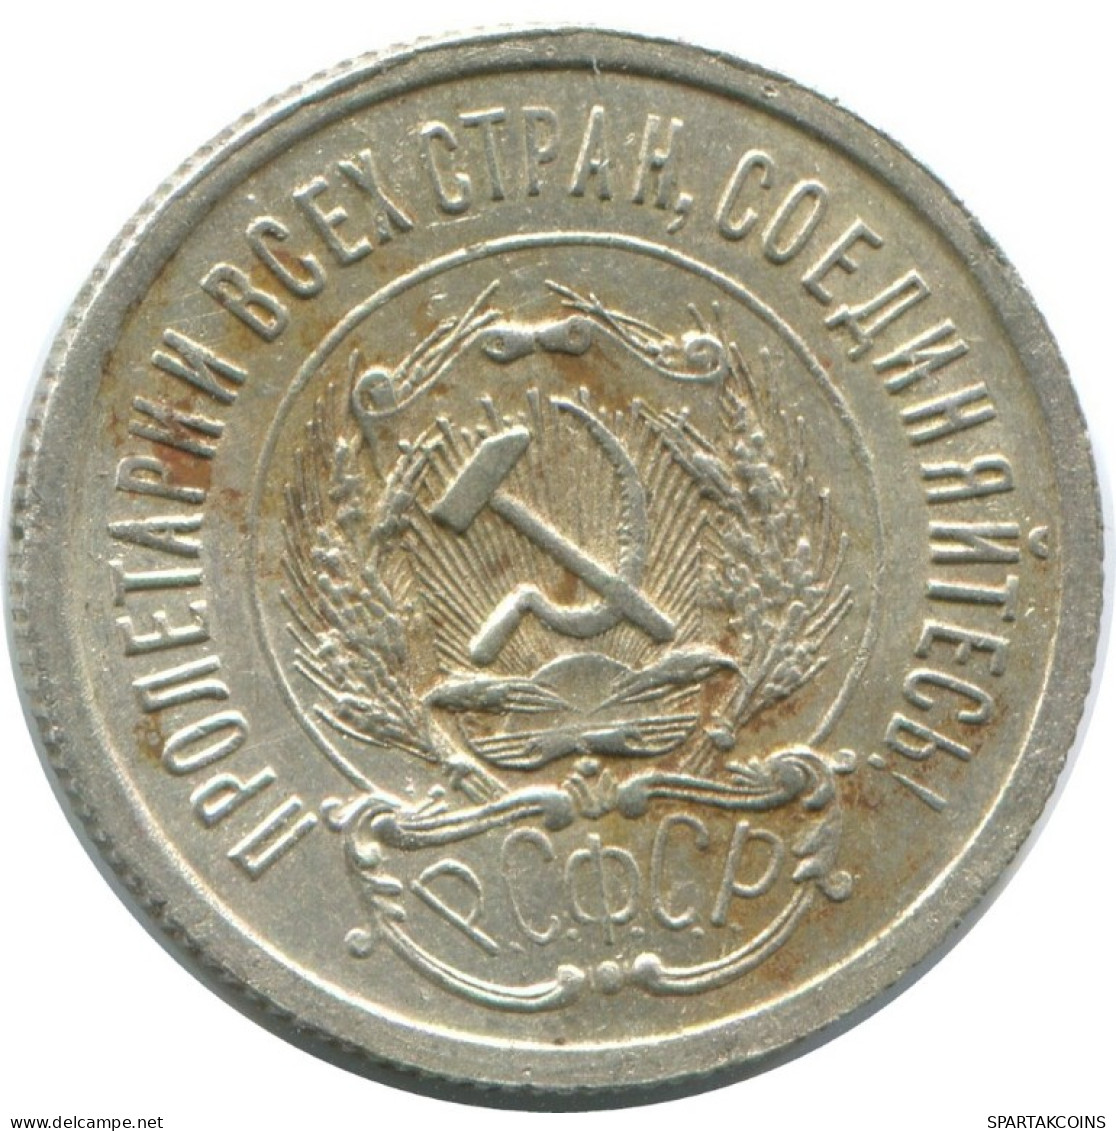 20 KOPEKS 1923 RUSSIA RSFSR SILVER Coin HIGH GRADE #AF694.U.A - Russia